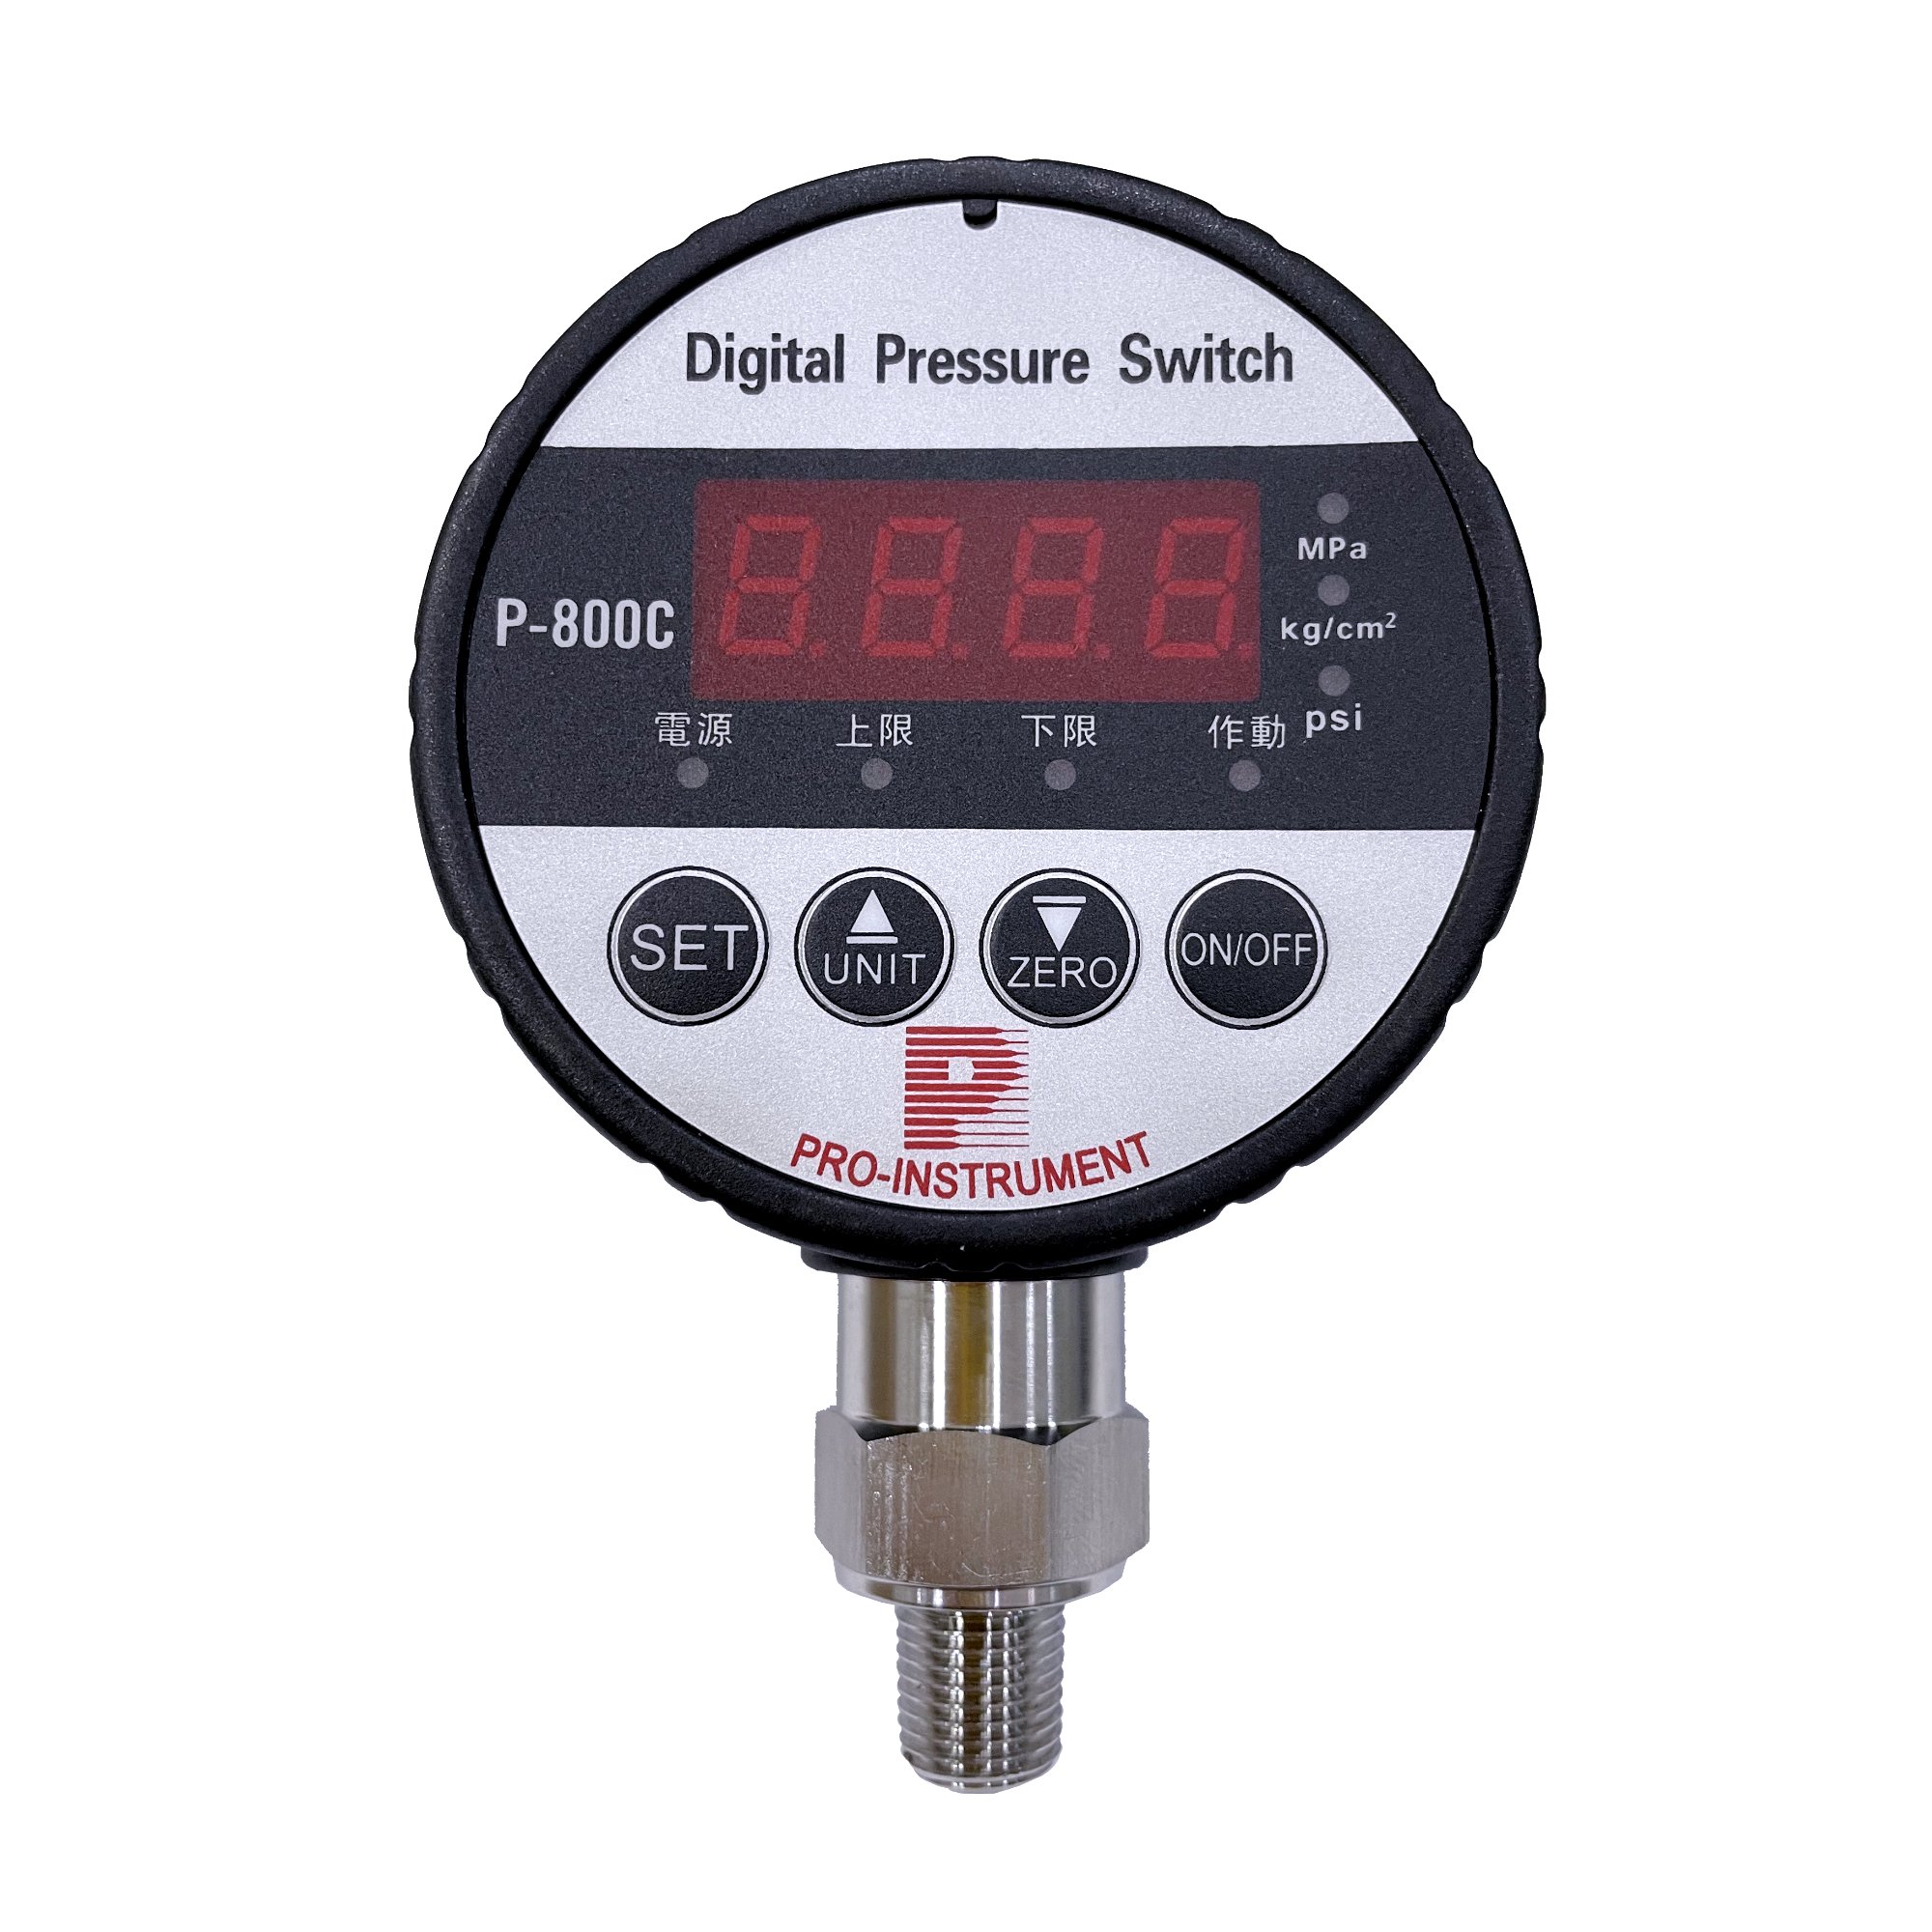 Digital pressure switch, P800-C SERIES